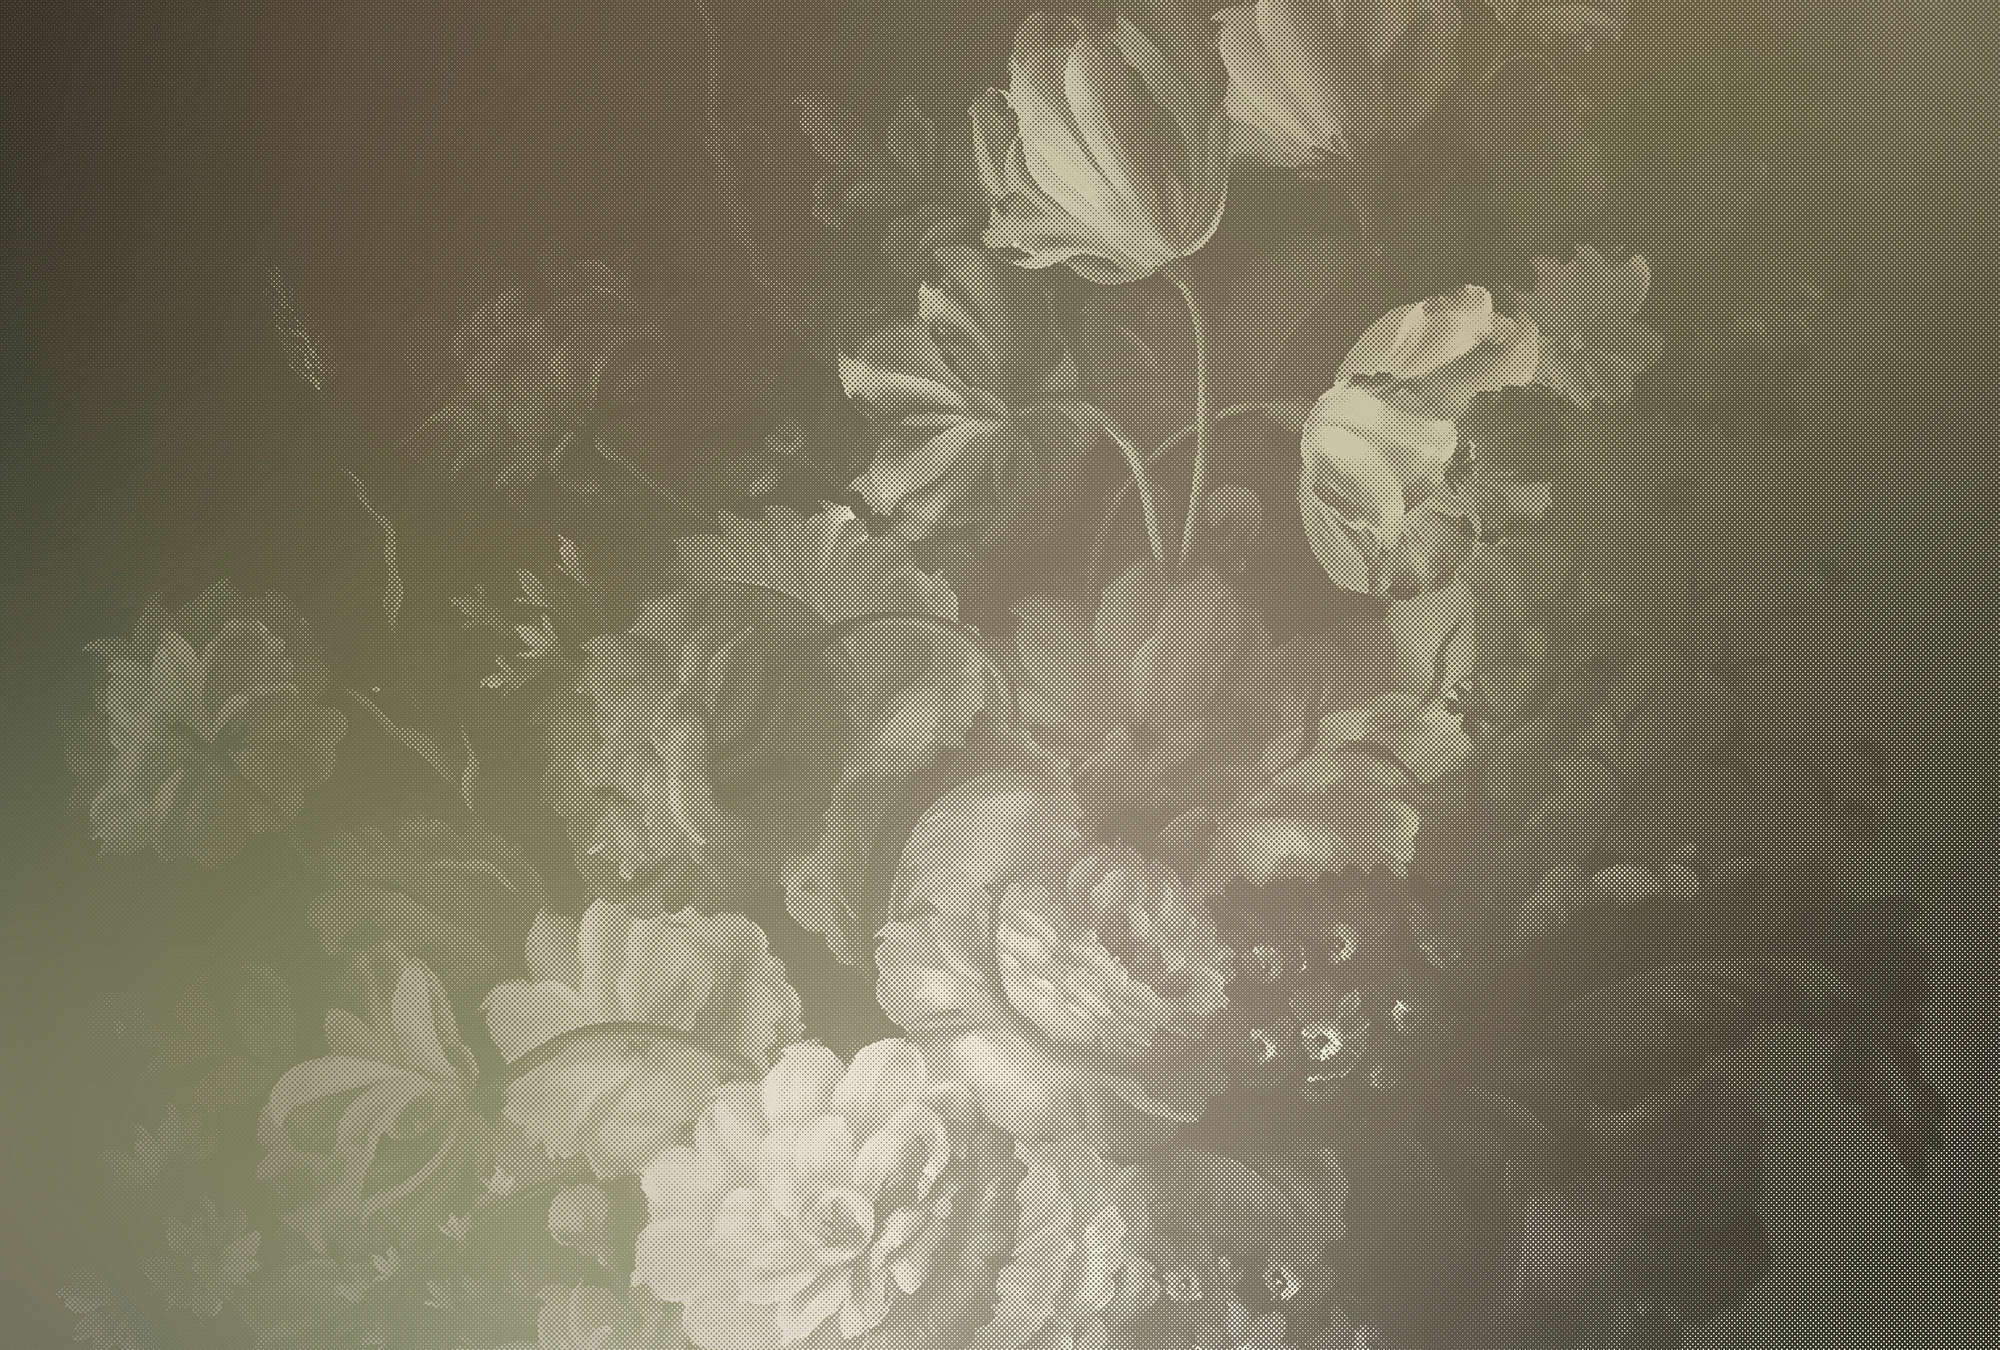             Olandese pastello 4 - Fotomurali con bouquet artistico in stile olandese - Taupe | struttura in tessuto non tessuto
        